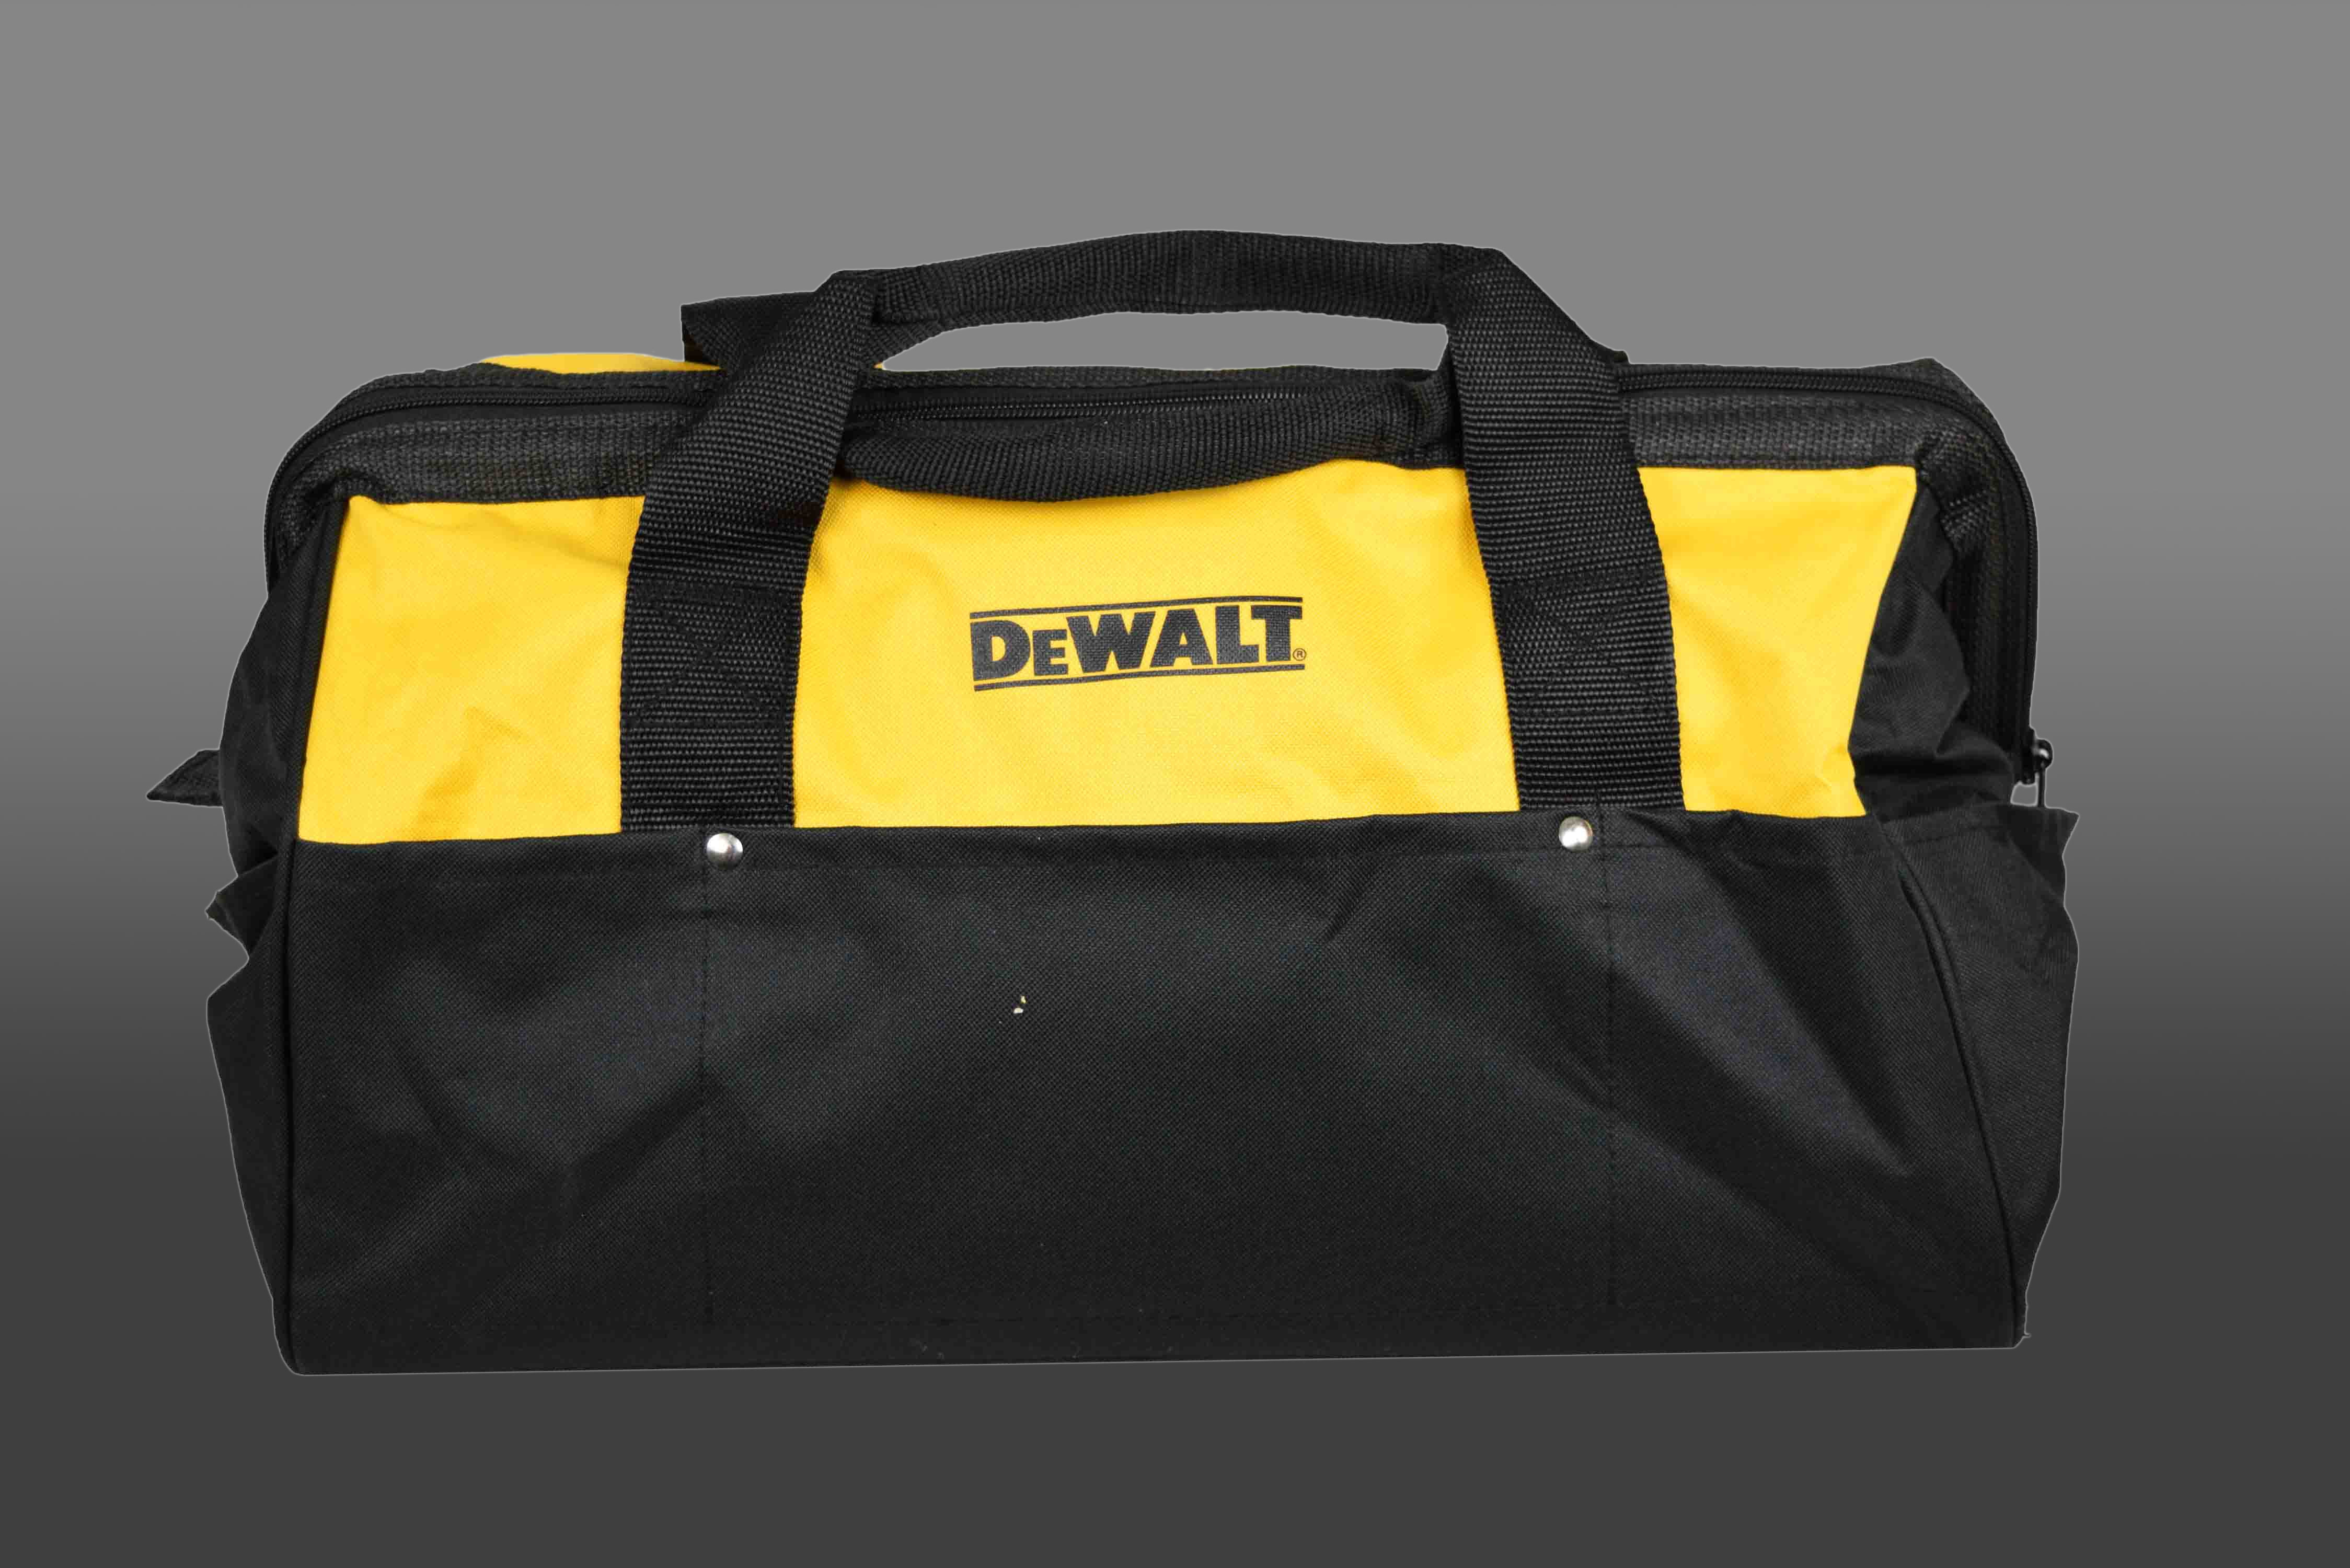 DeWalt Contractor Tool Bag Black Bottom 6 Outer Slits 13 x 9 x 9